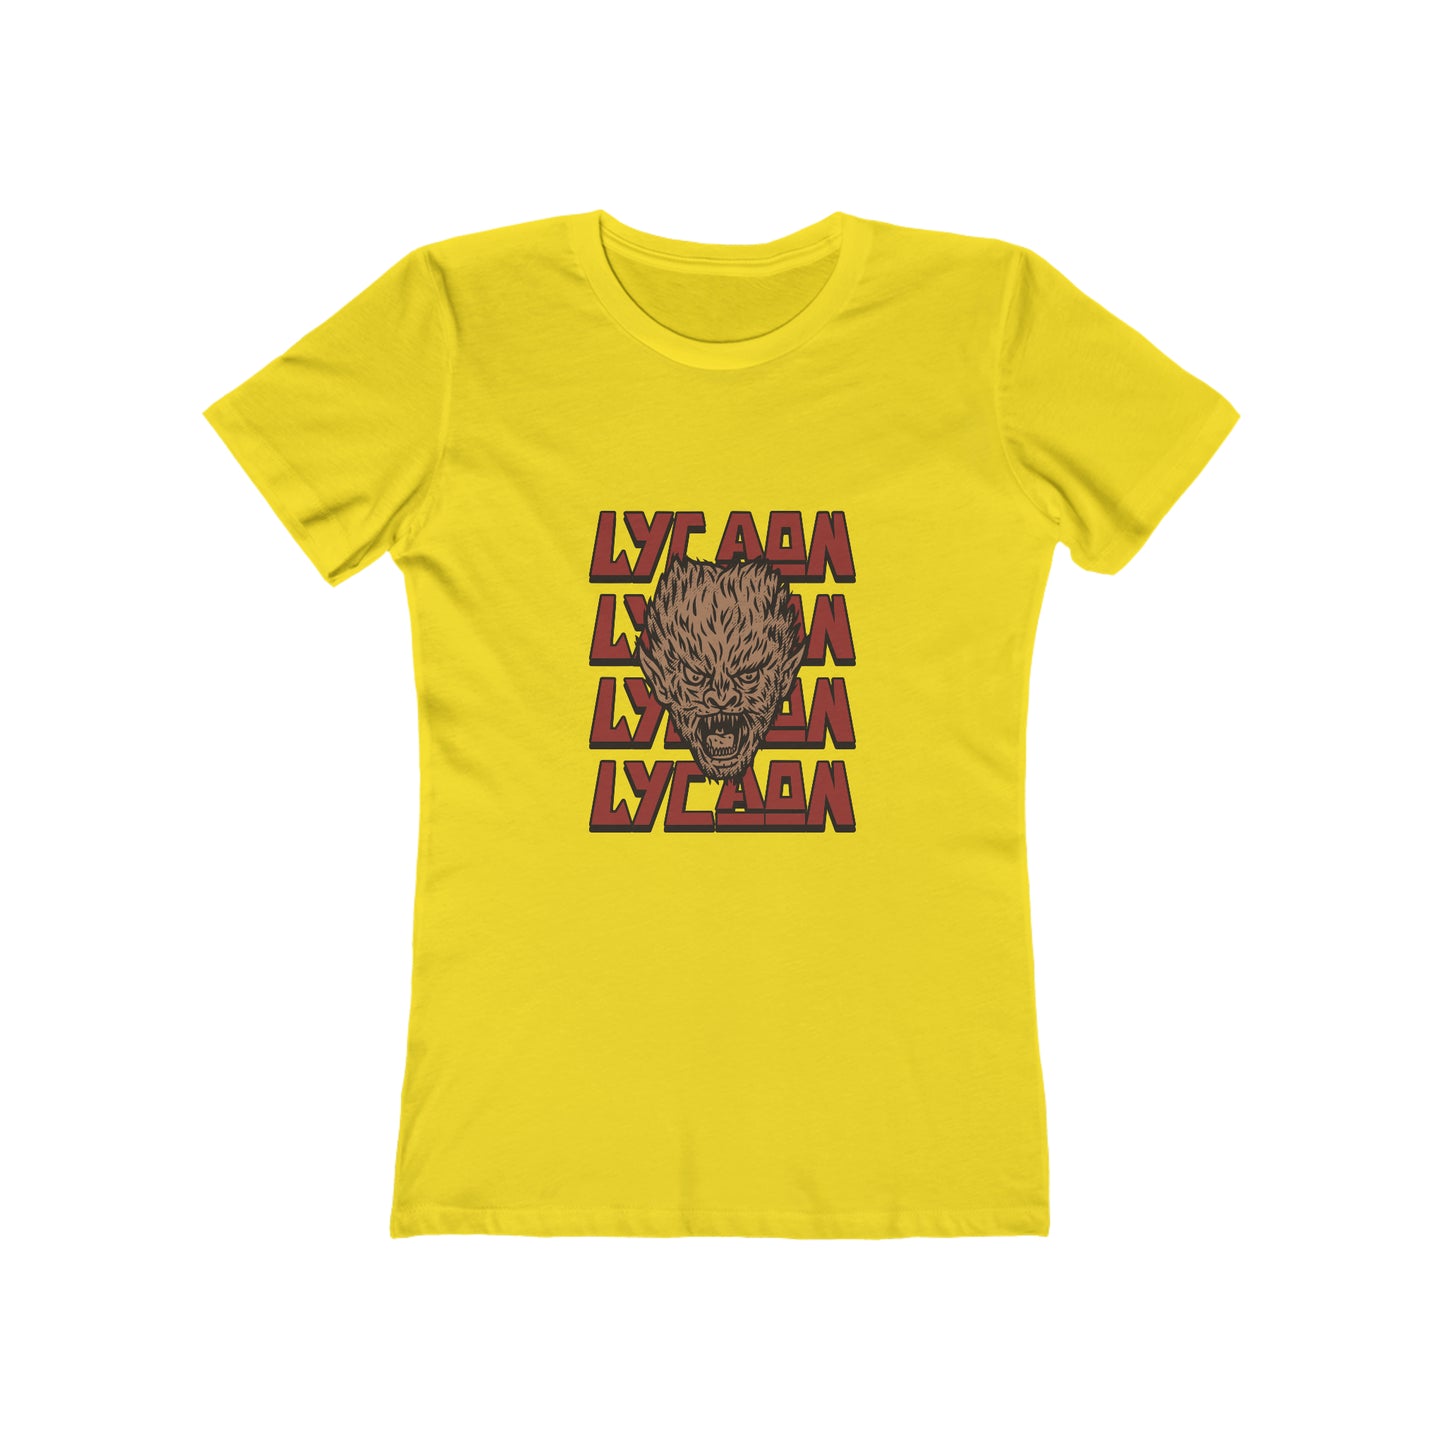 Lycaon - Women's T-shirt